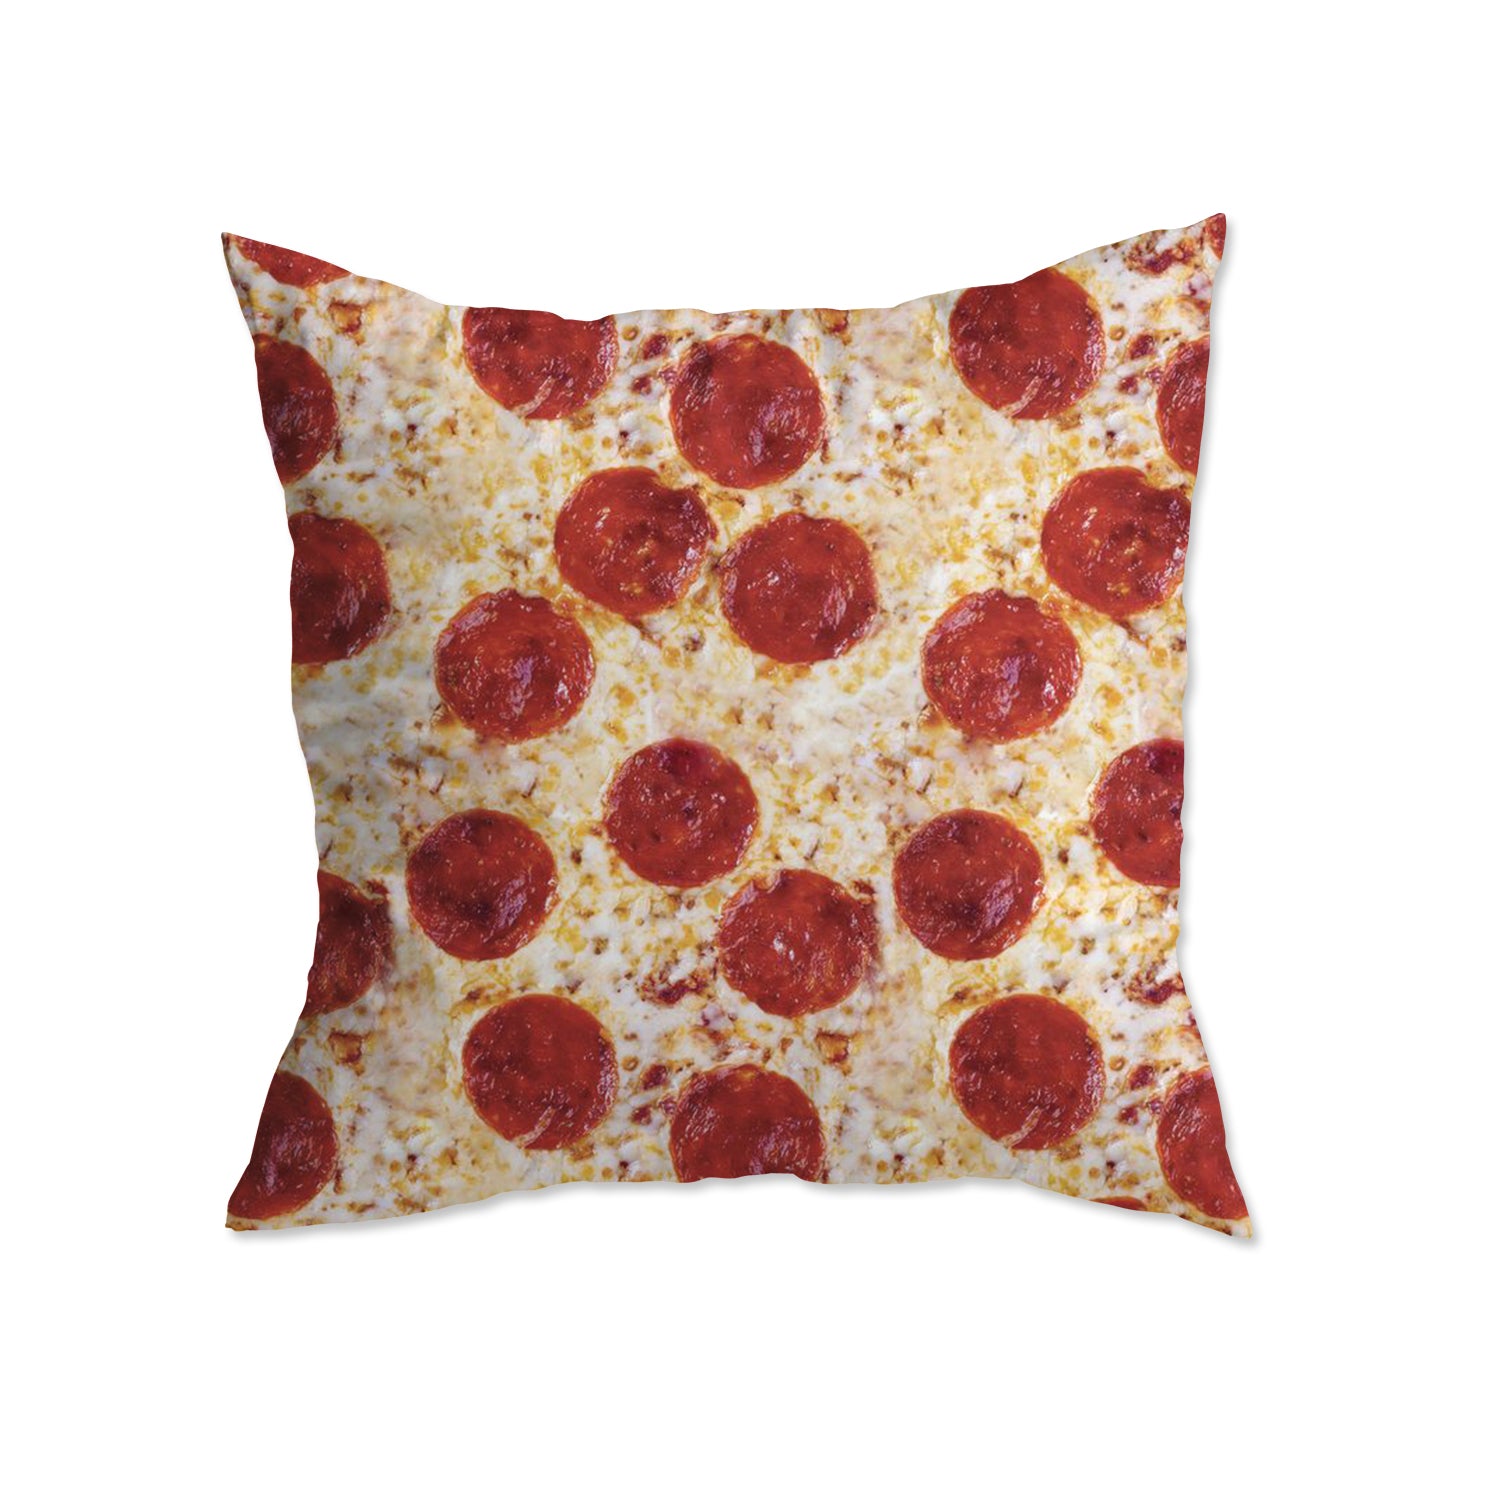 Polyester Humorous Pizza Blanket